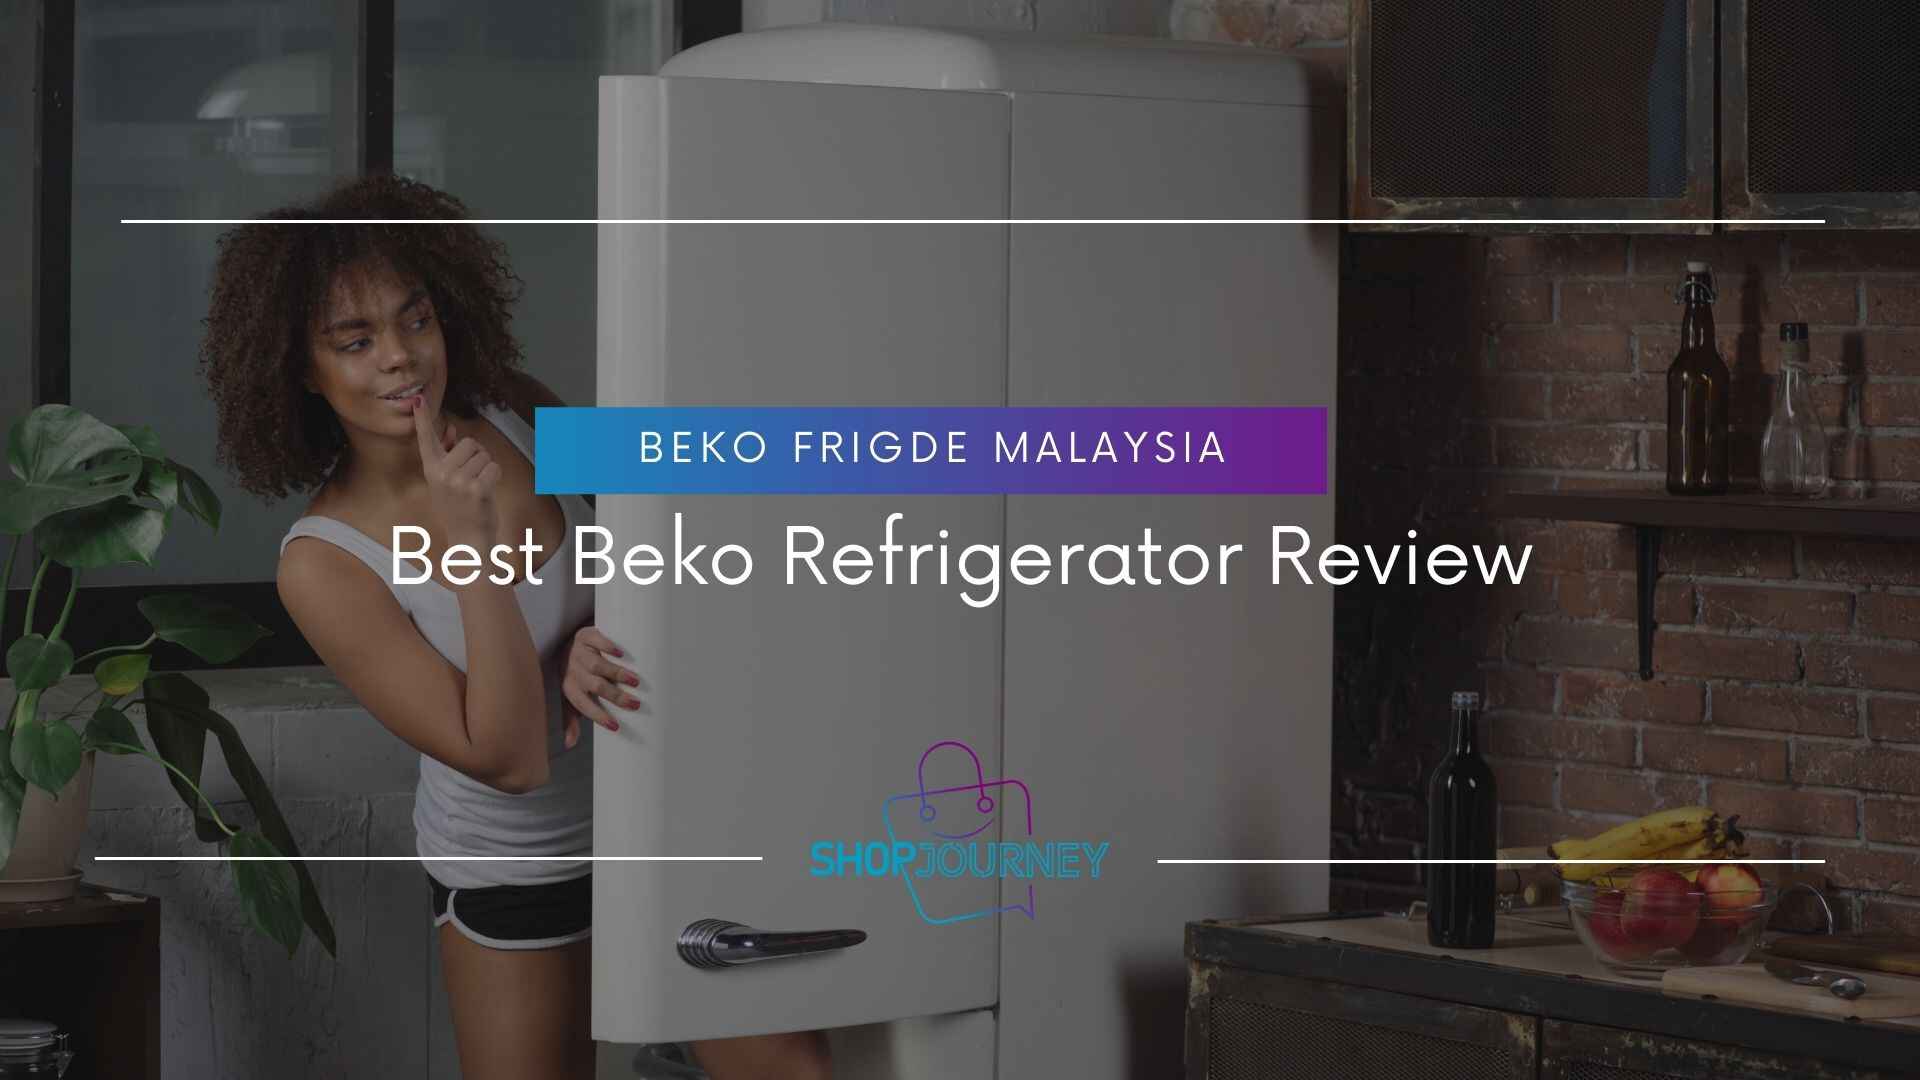 Best beko refrigerator review.